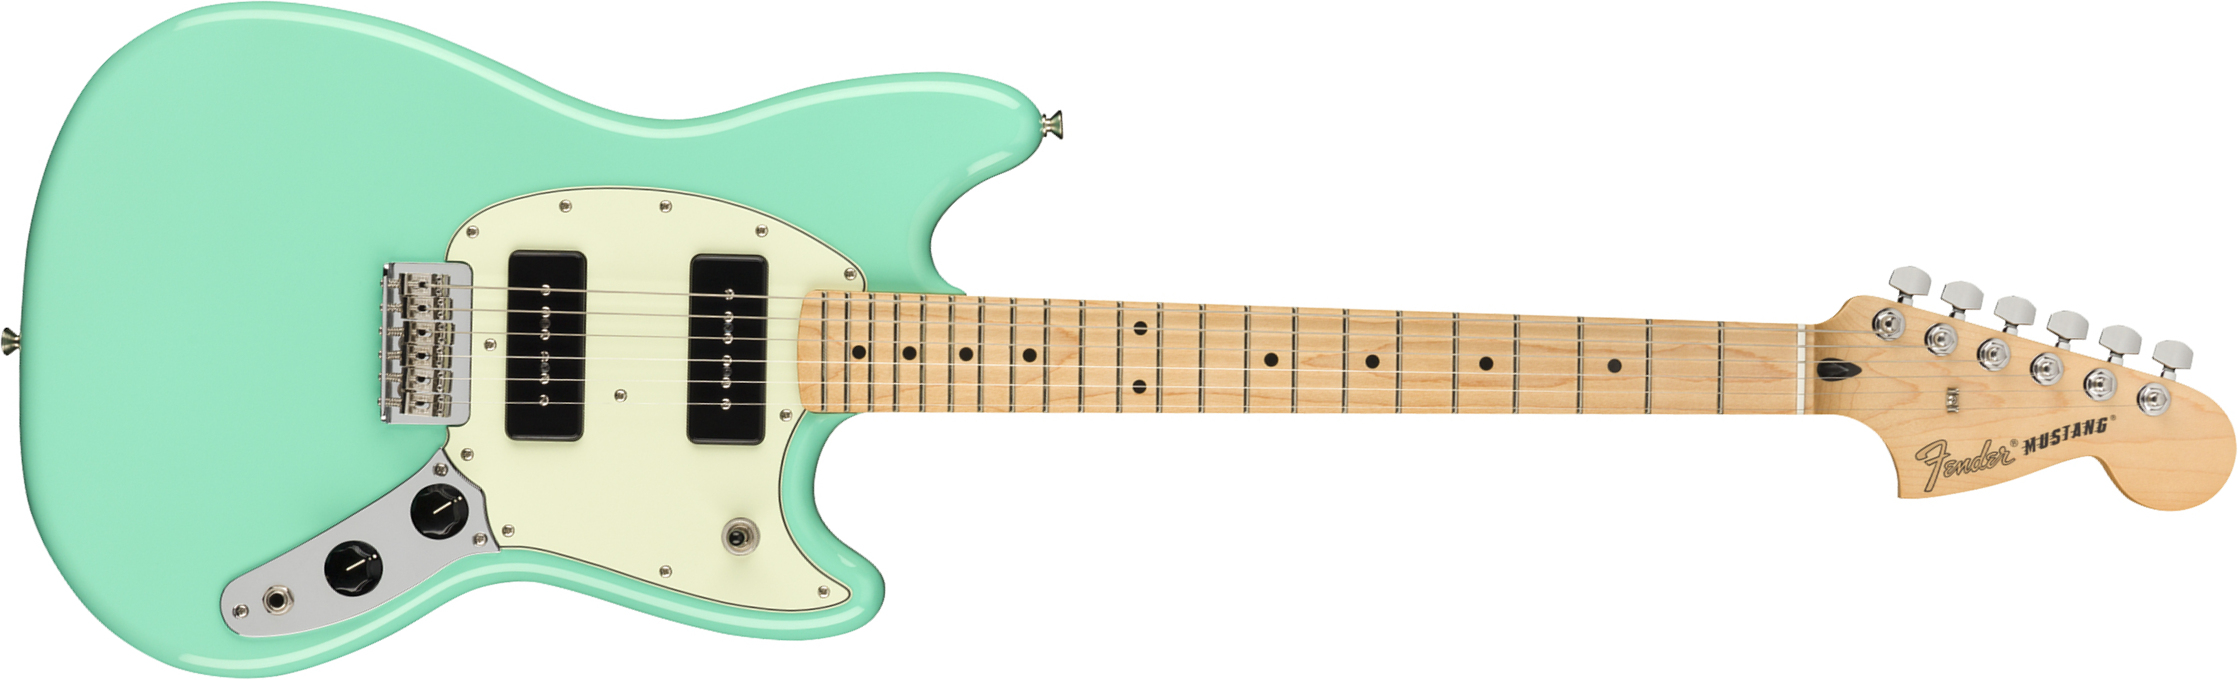 Fender Mustang Player 90 Mex Ht 2p90 Mn - Seafoam Green - Retro-rock elektrische gitaar - Main picture